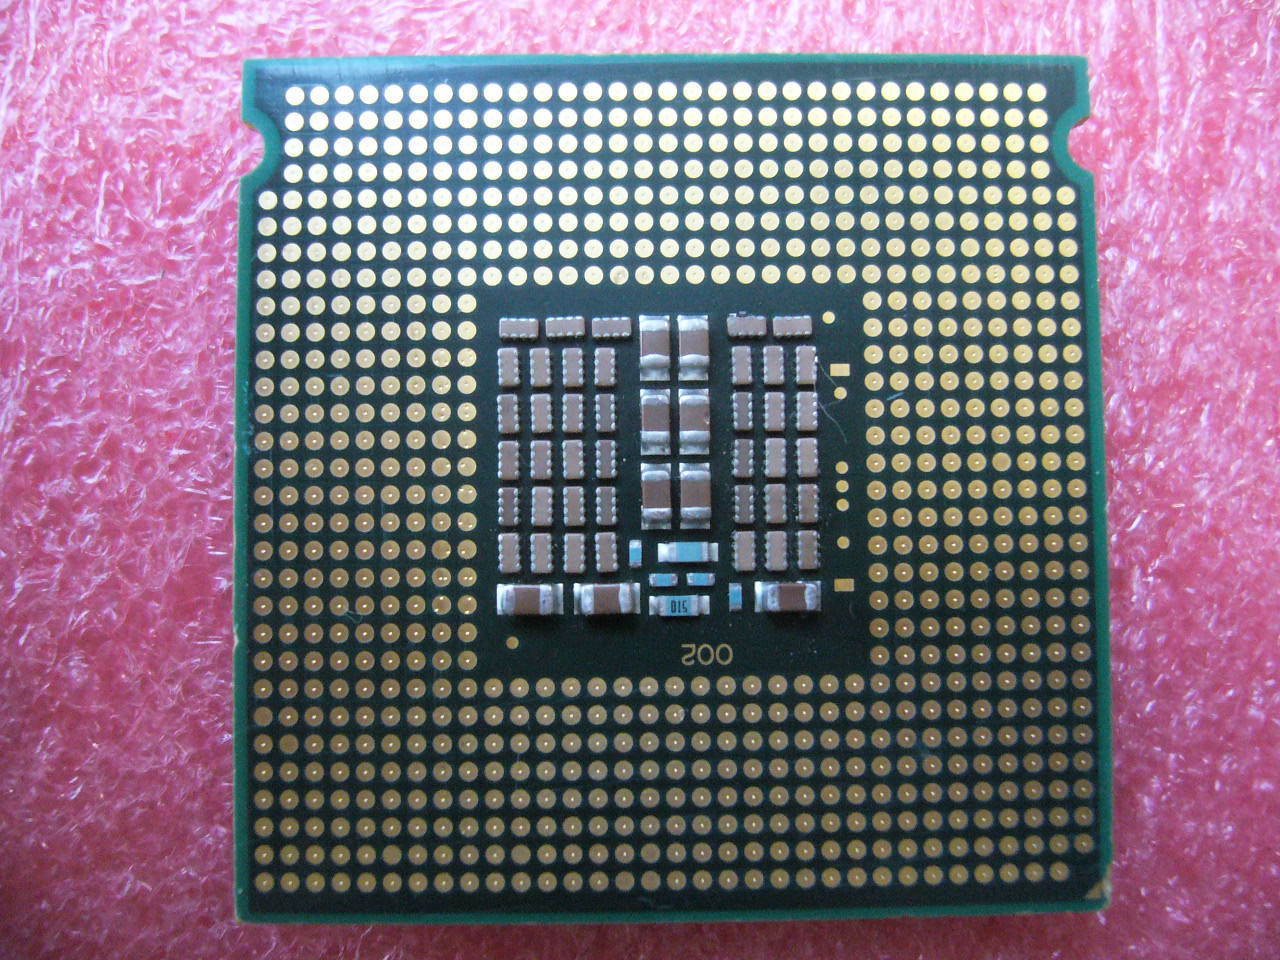 QTY 1x Intel Xeon CPU Quad Core X5450 3.00Ghz/12MB/1333Mhz LGA771 SLASB - zum Schließen ins Bild klicken